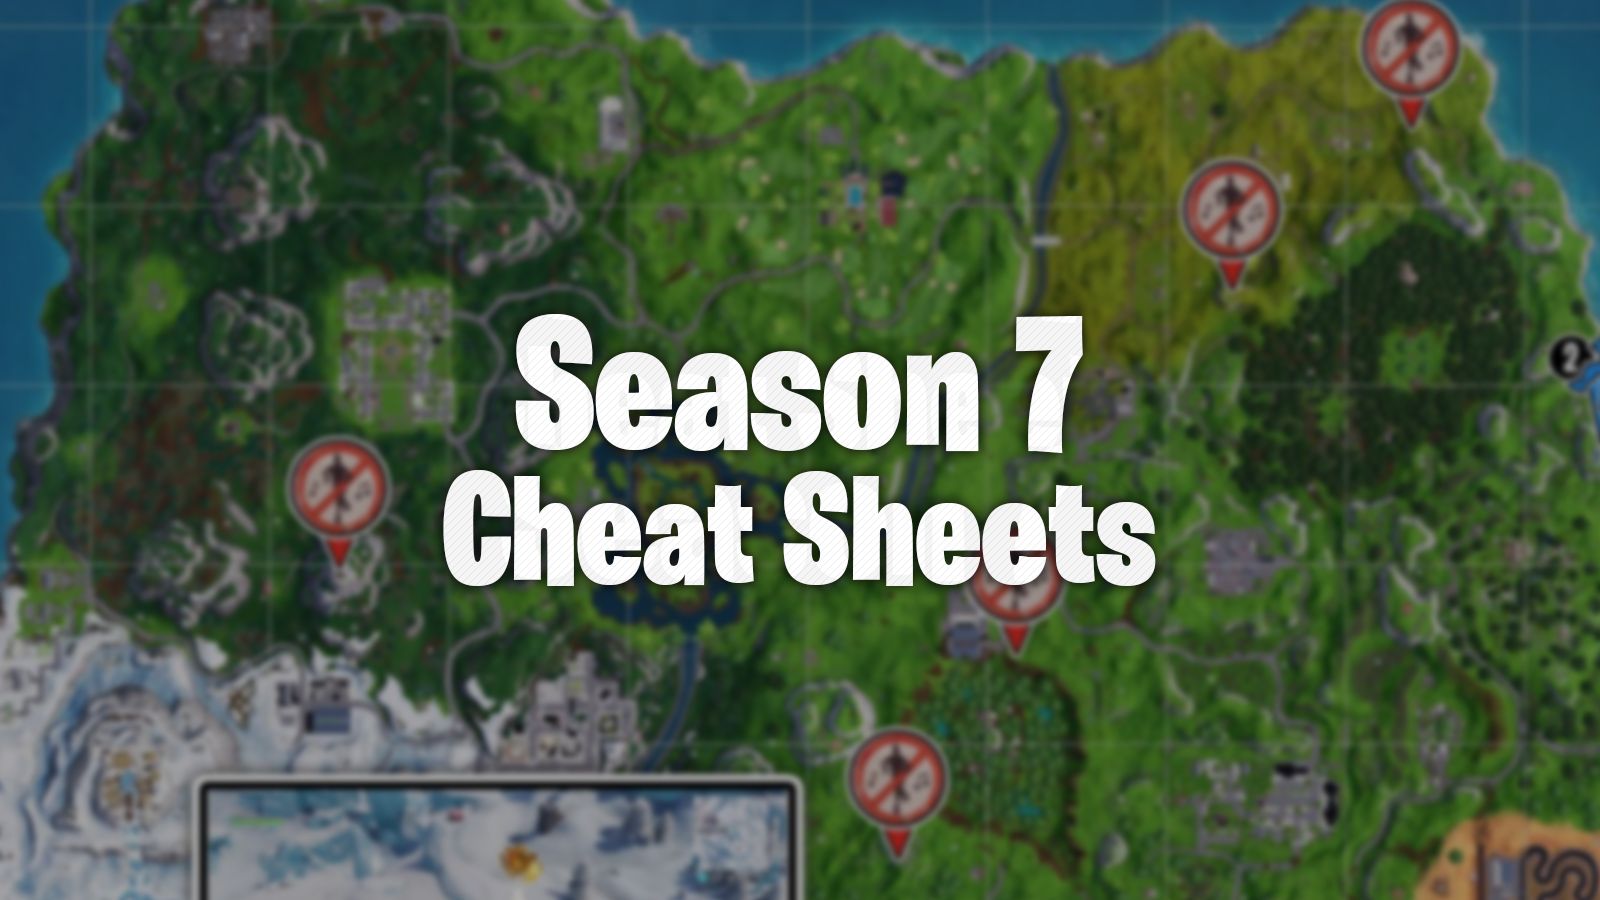 fortnite season 7 challenge cheat sheets - fortnite cheat sheet week 1 season 7